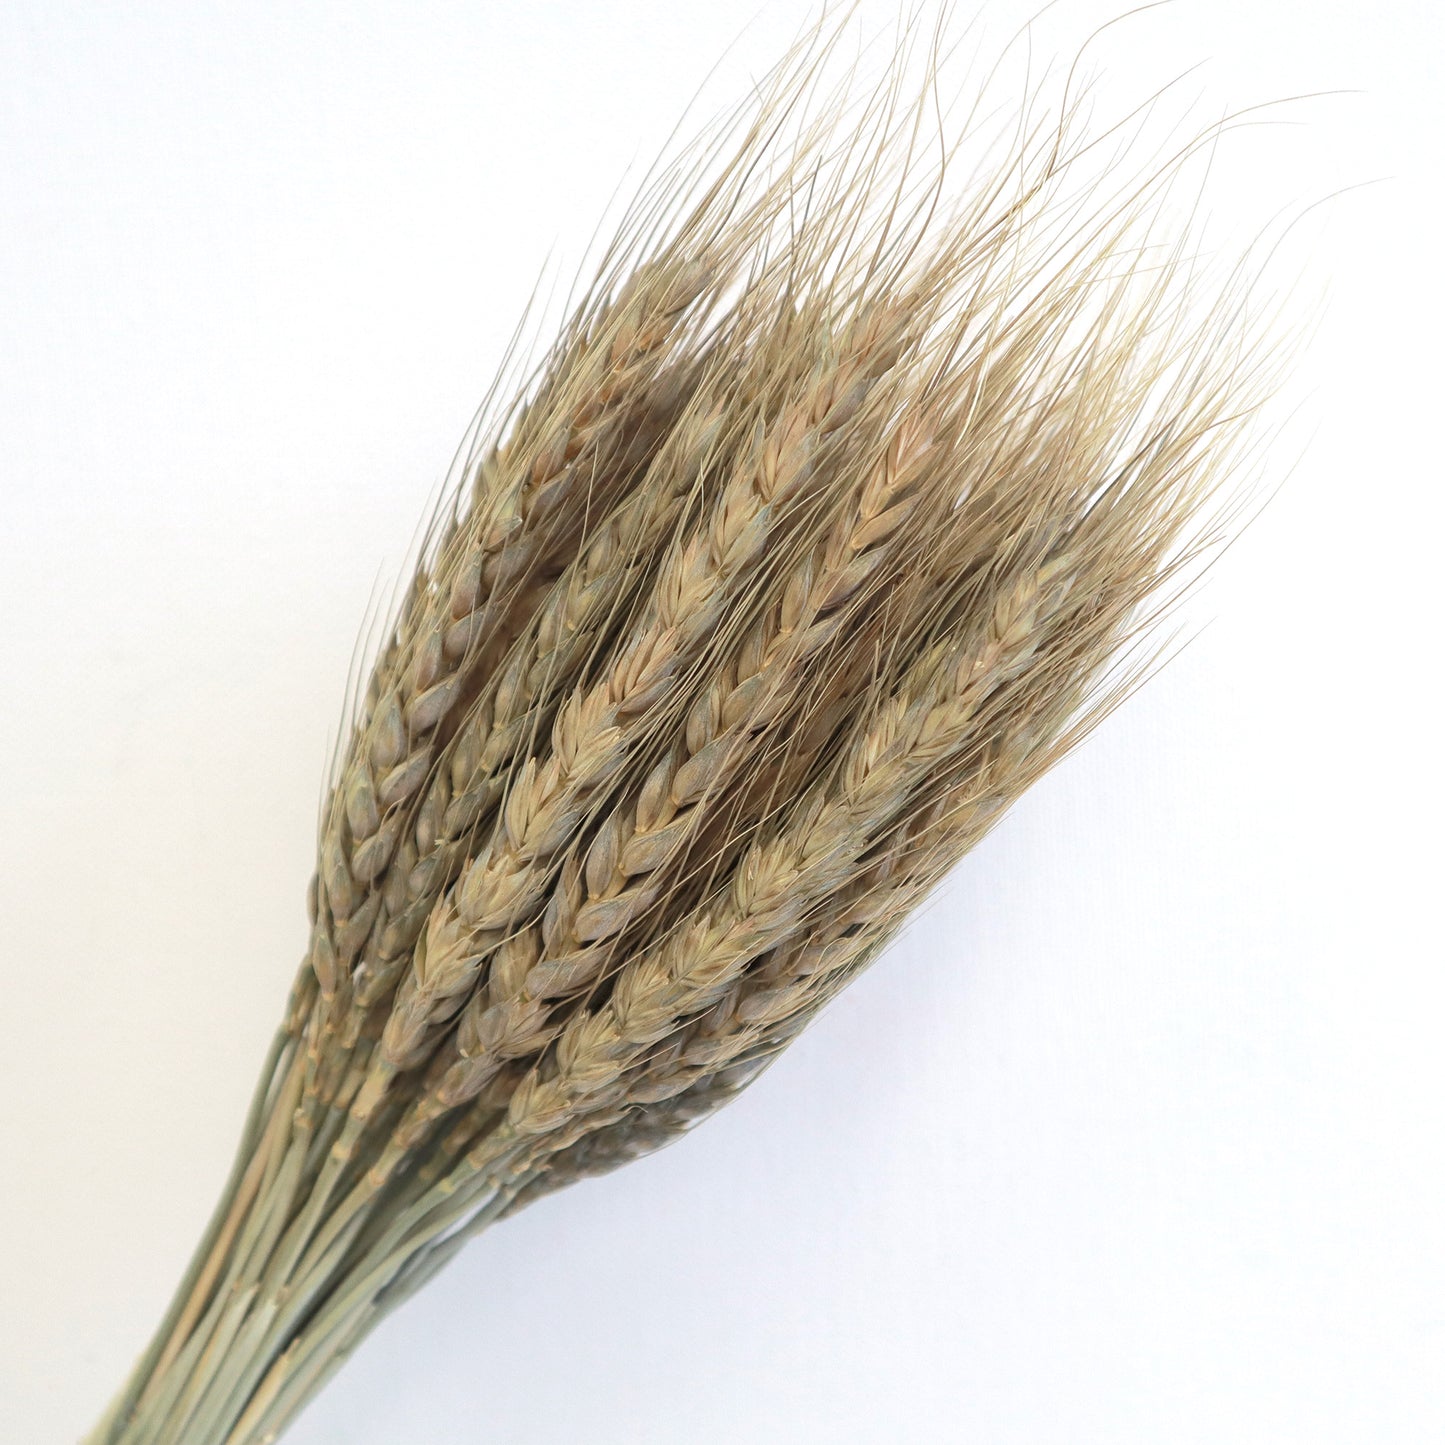 Dried Wheat